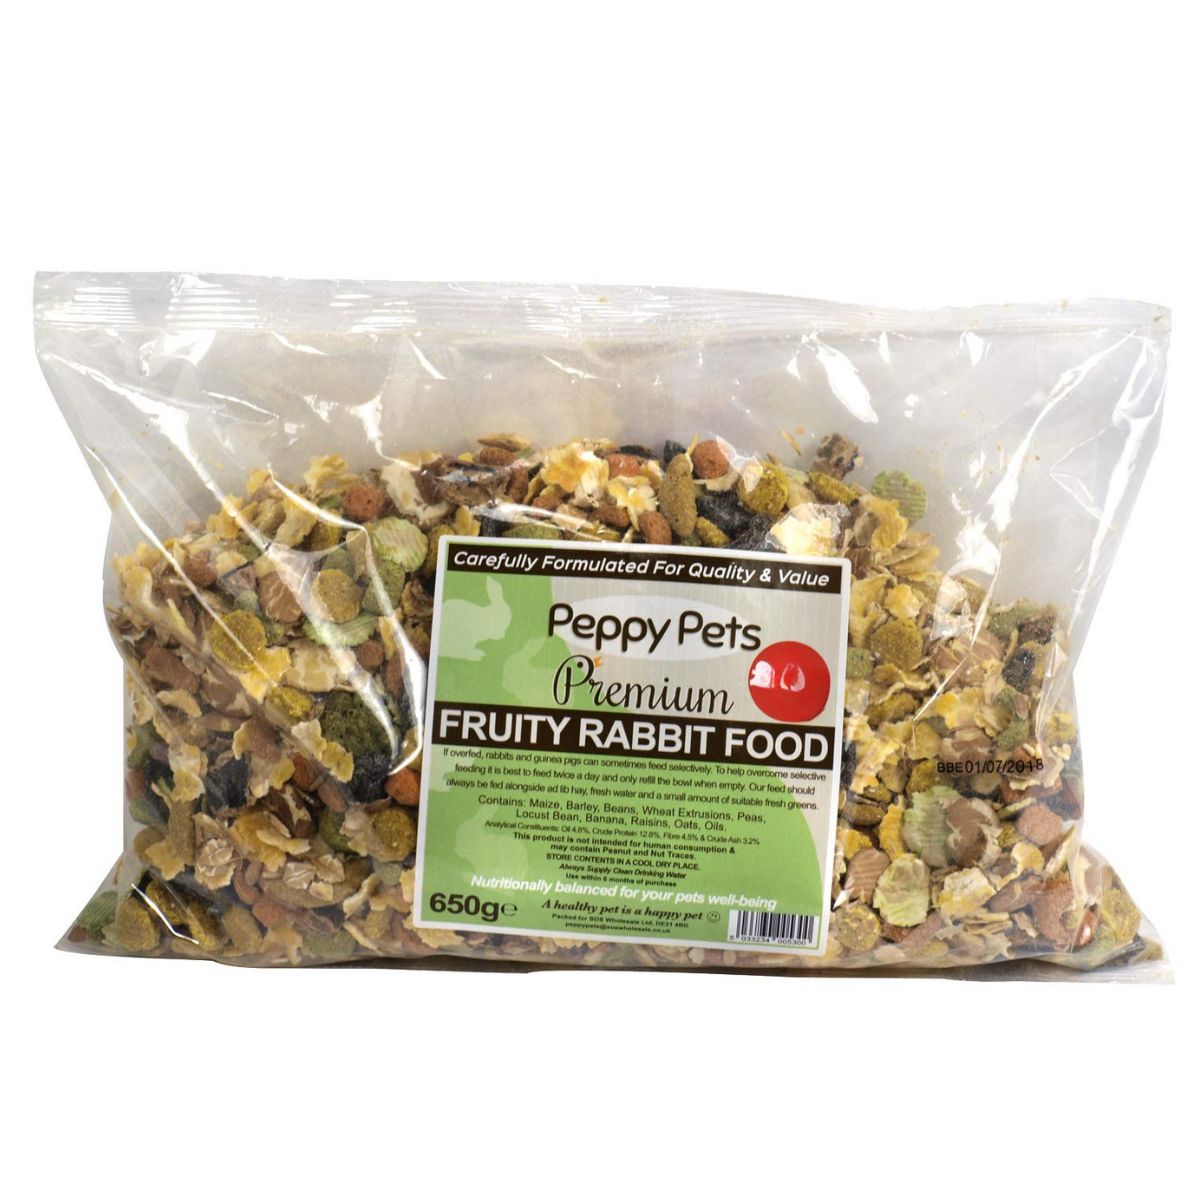 A bag of Peppy Pets - Fruity Rabbit - 600g granola.